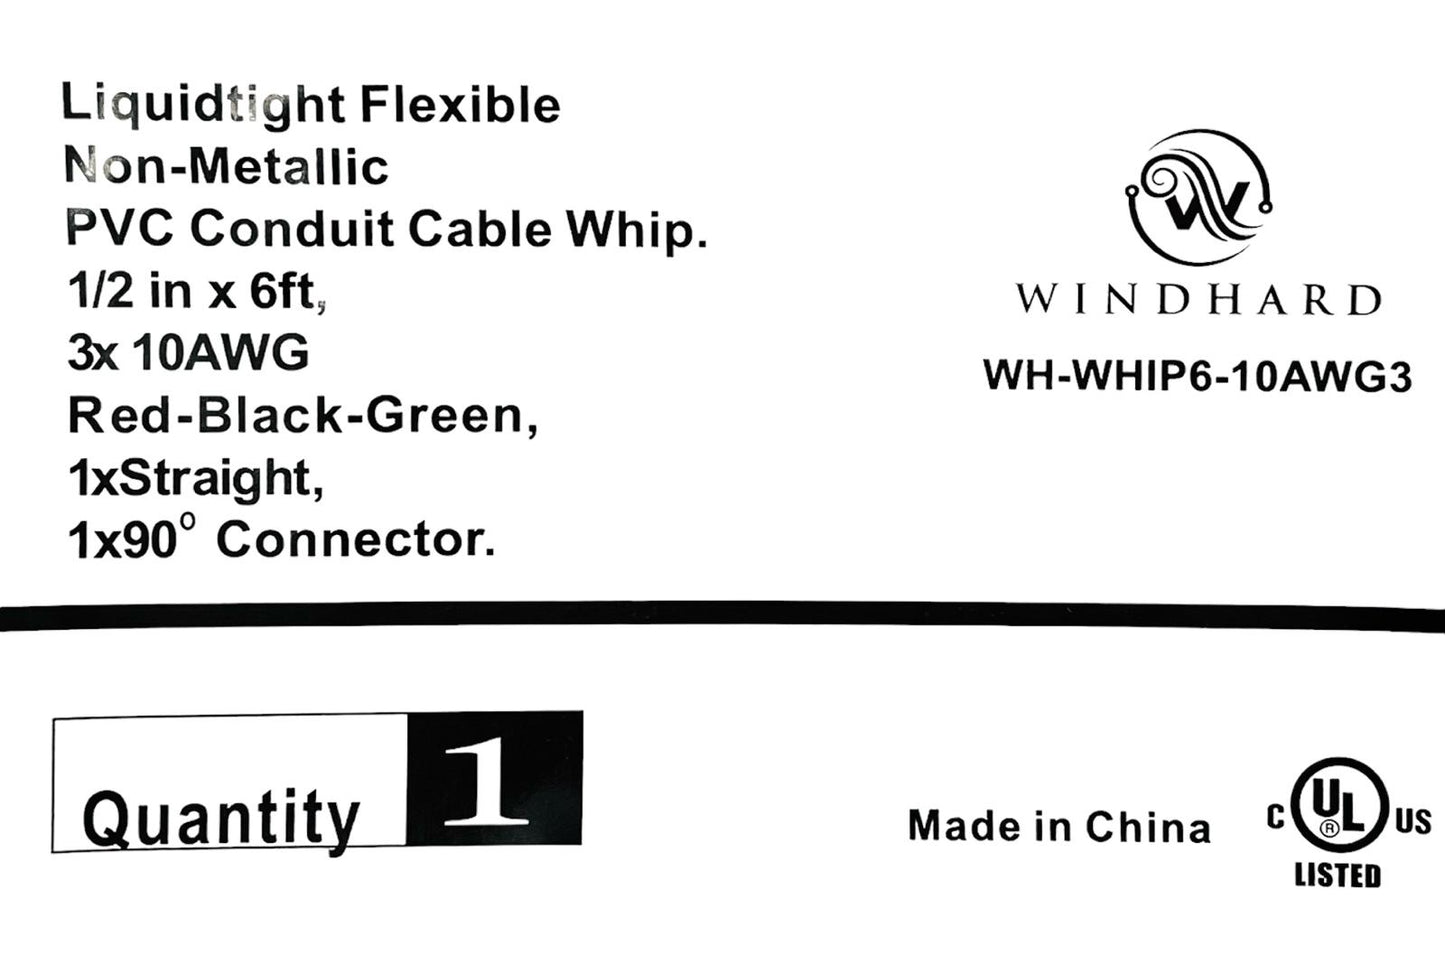 Conduit Whip 1/2 in. x 6 ft. Ultratite Liquidtight Flexible Non-Metallic